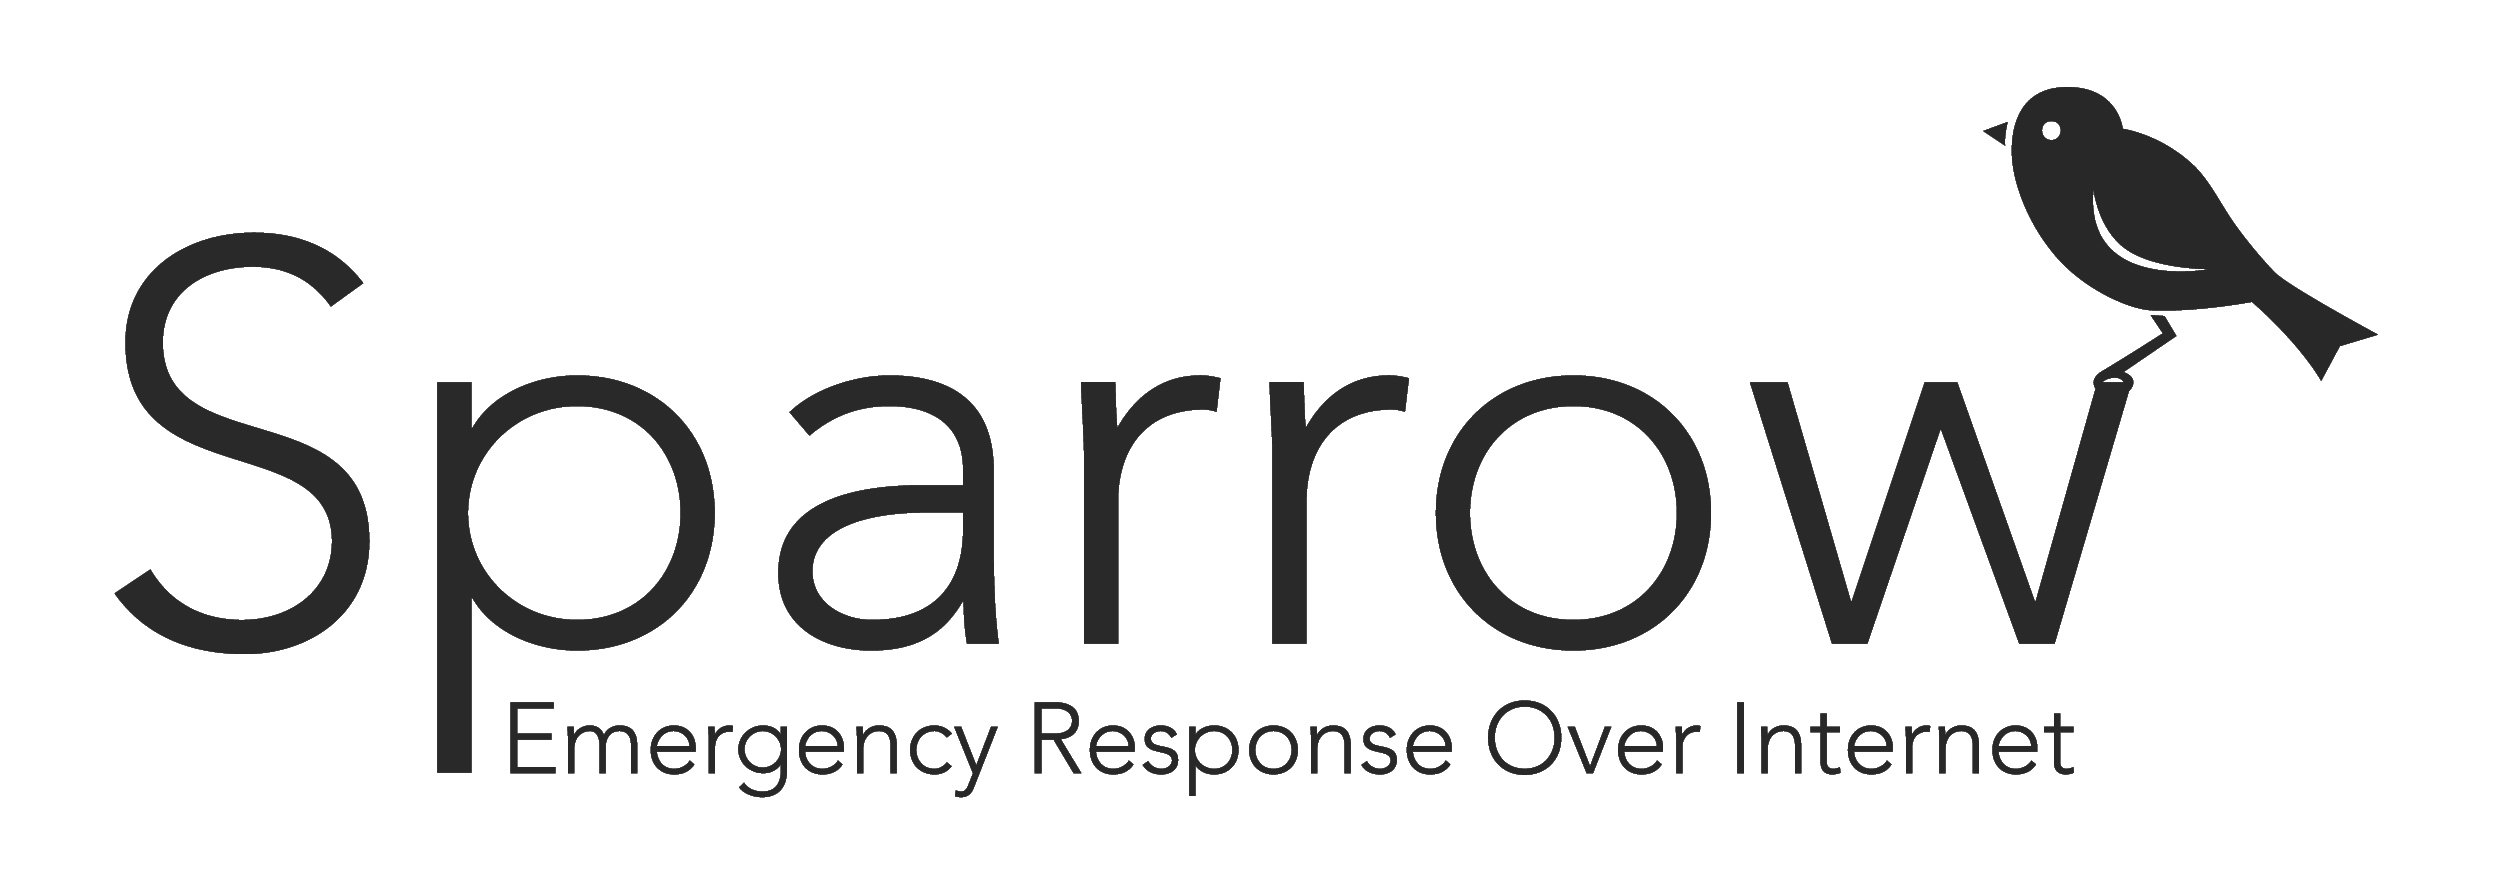  SPARROW EMERGENCY RESPONSE OVER INTERNET